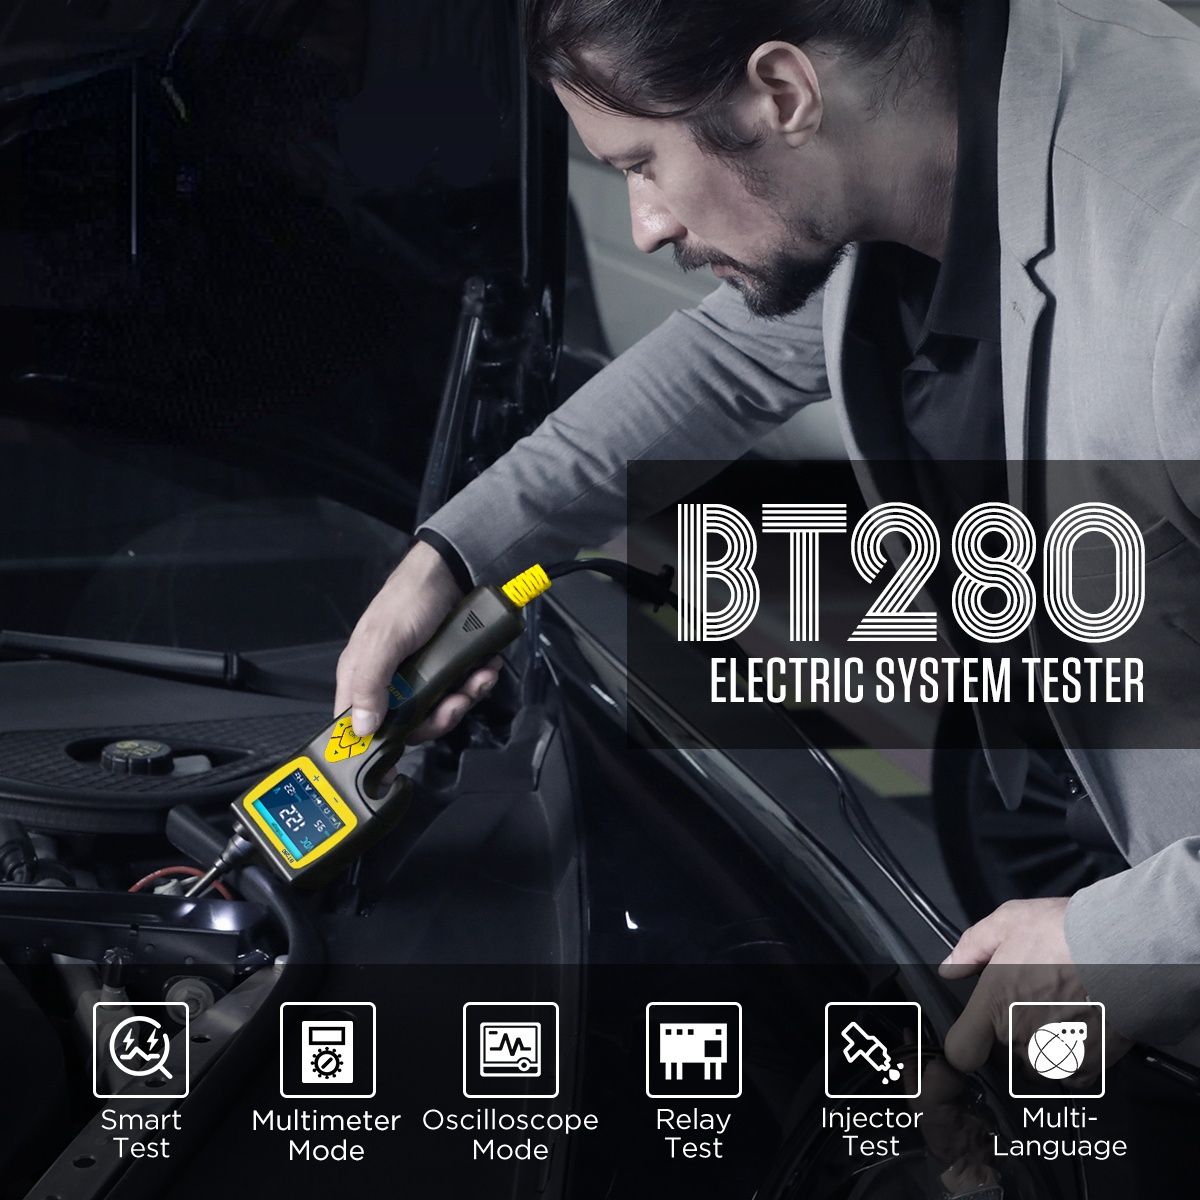 AUTOOL BT280 Car Electric System Tester